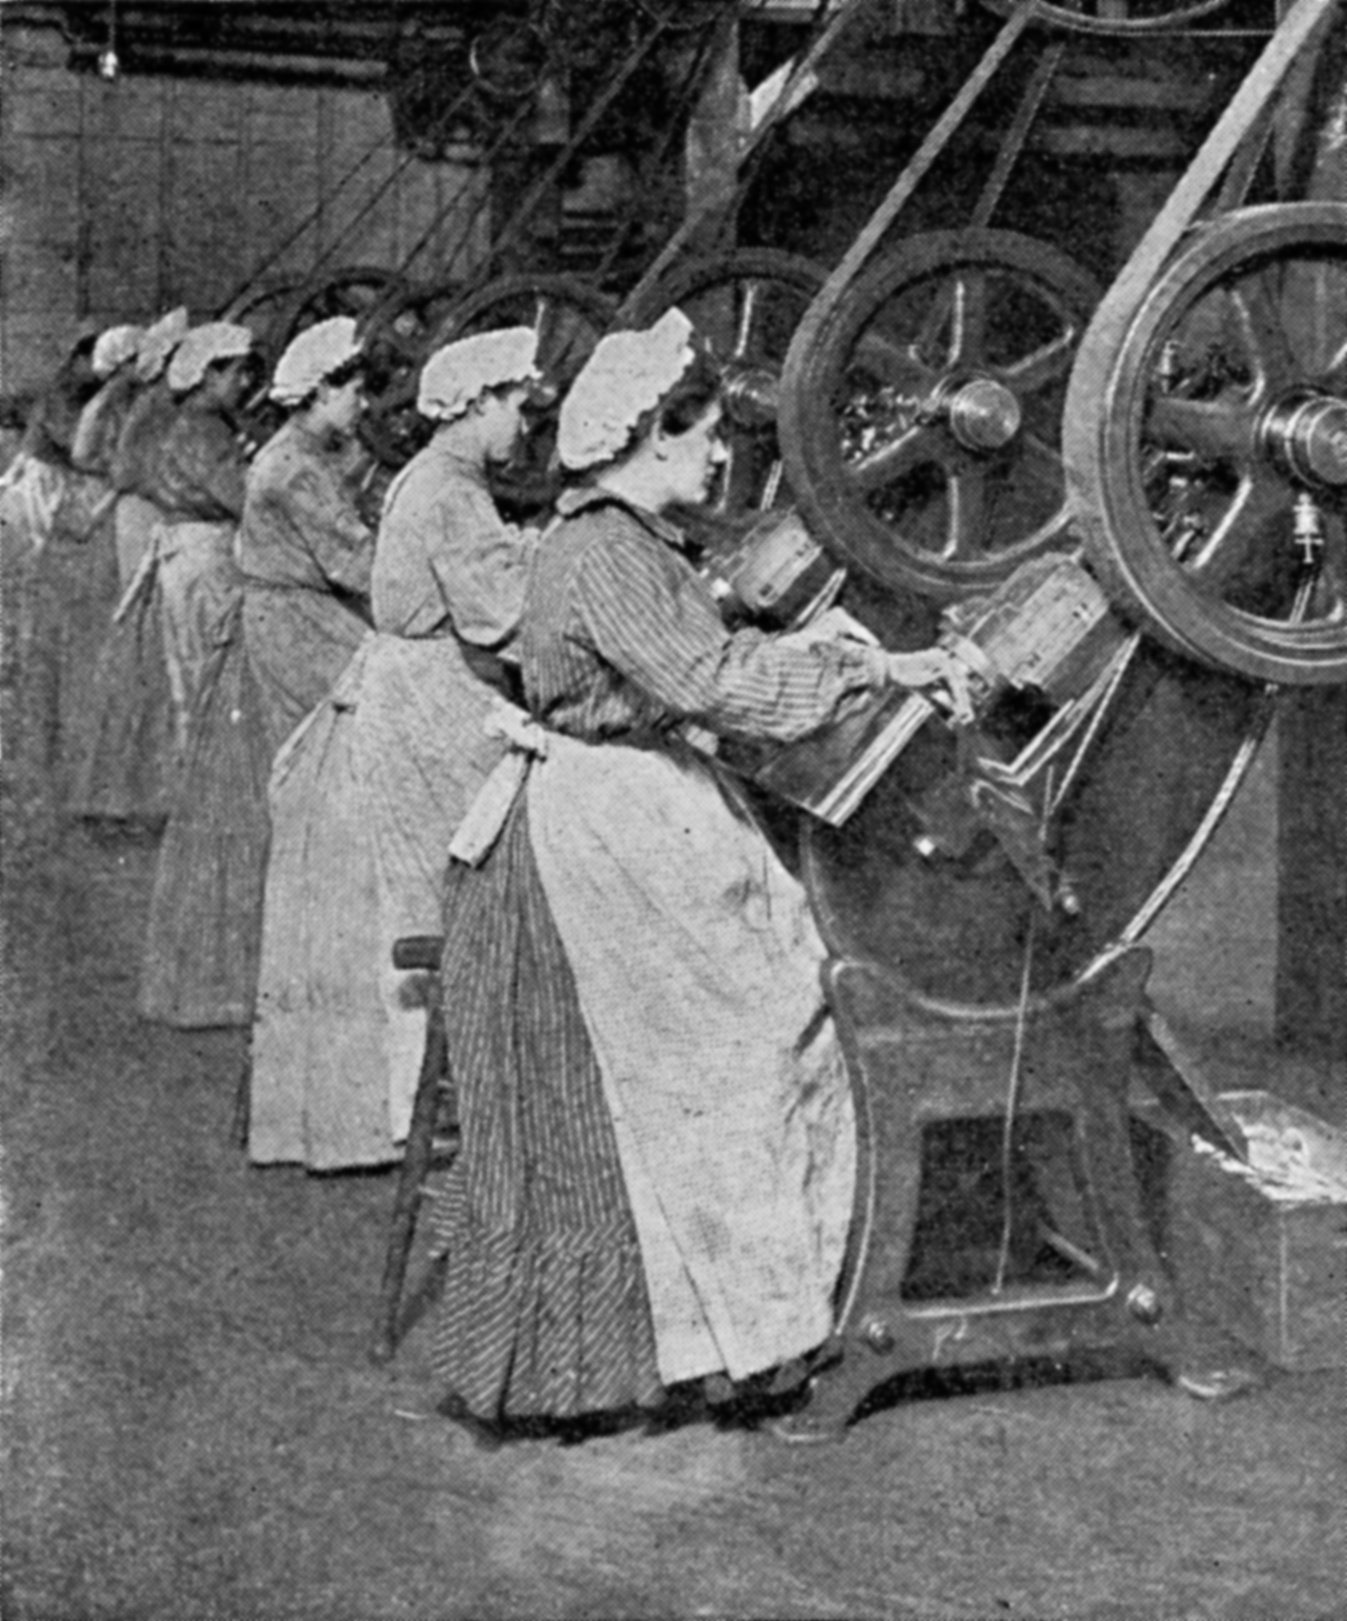 women labor in the industrial revolution